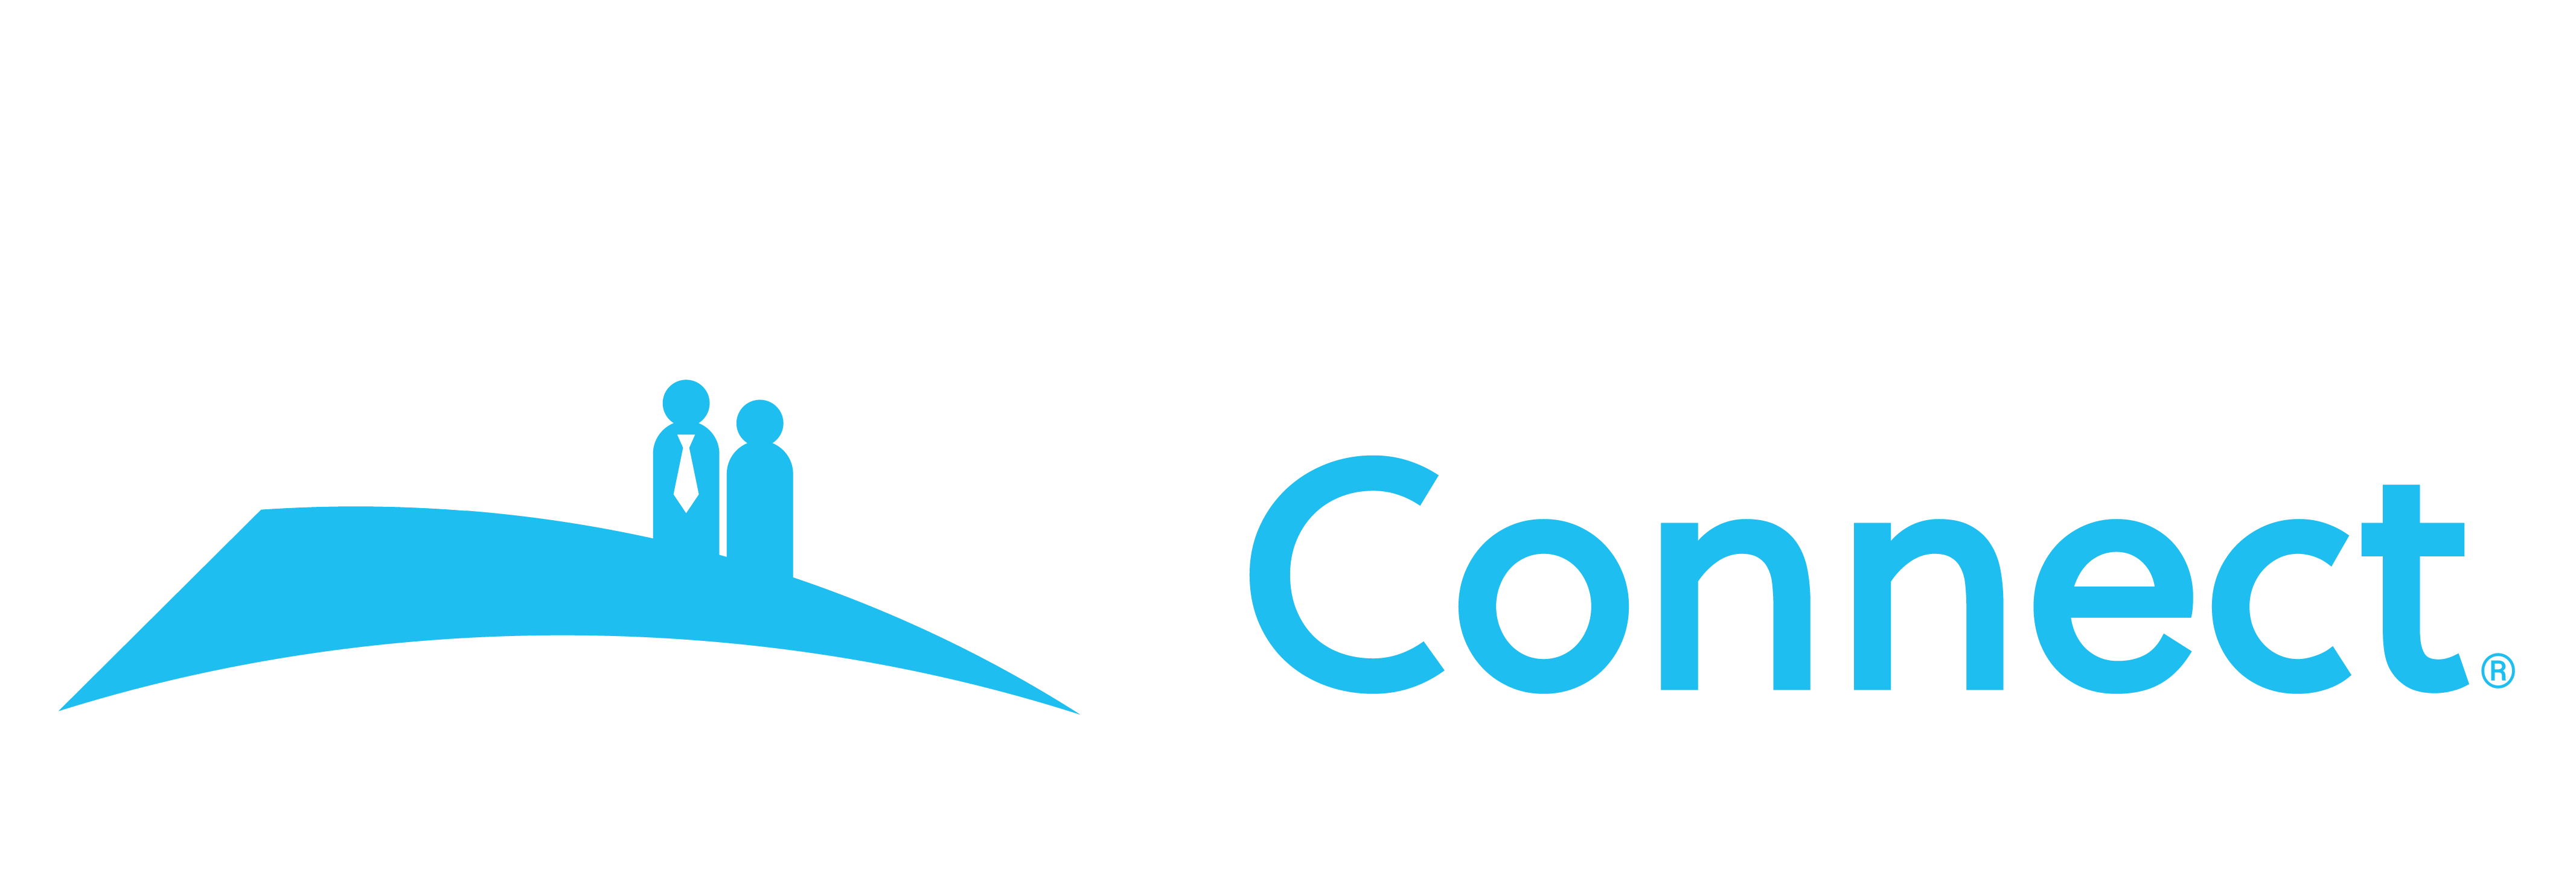 Homebuyer connect logo